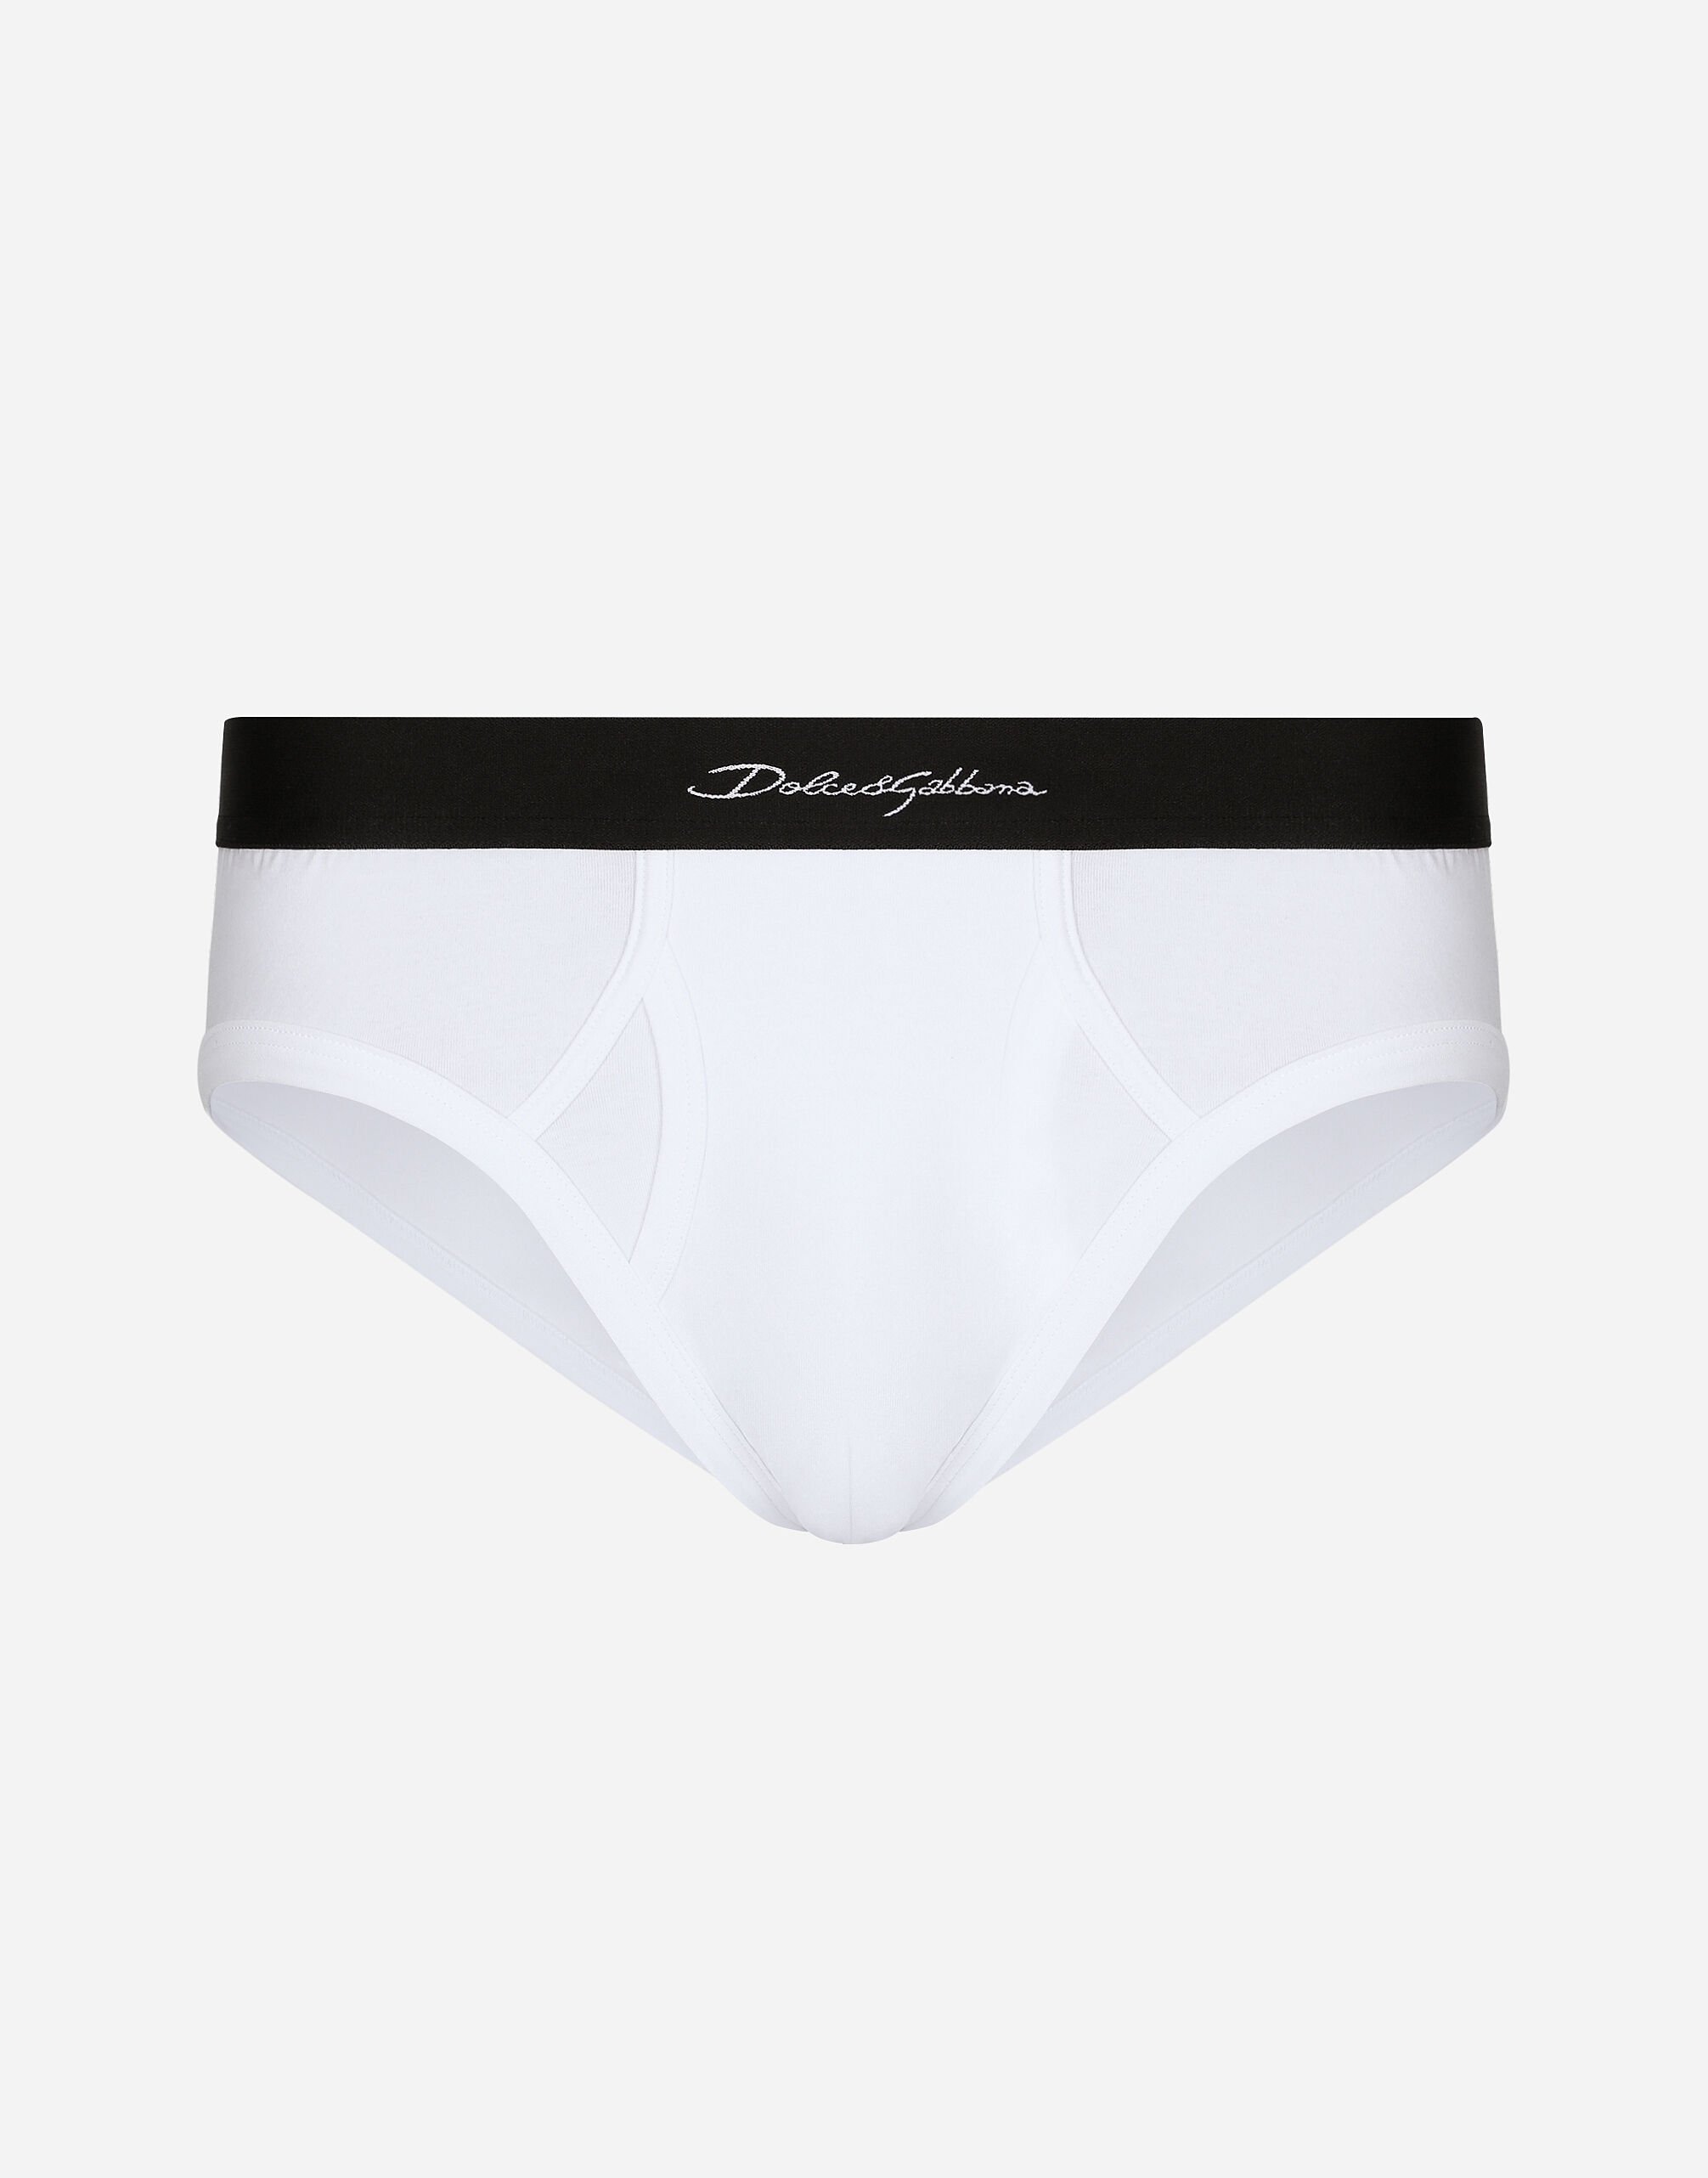 Dolce & Gabbana Slip medio en punto de algodón bielástico Imprima G031TTHI1SV